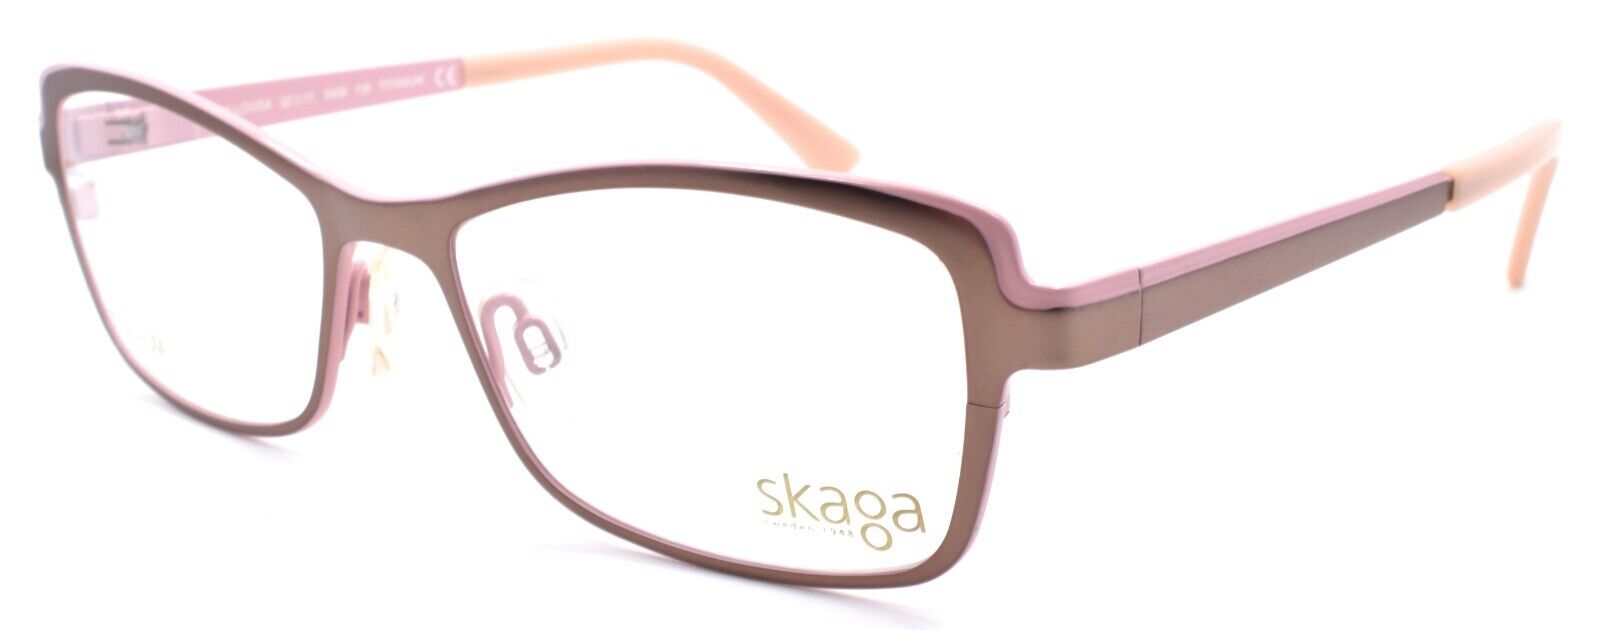 1-Skaga 3856 Lovisa 5409 Women's Eyeglasses TITANIUM 52-17-135 Pink-Does not apply-IKSpecs